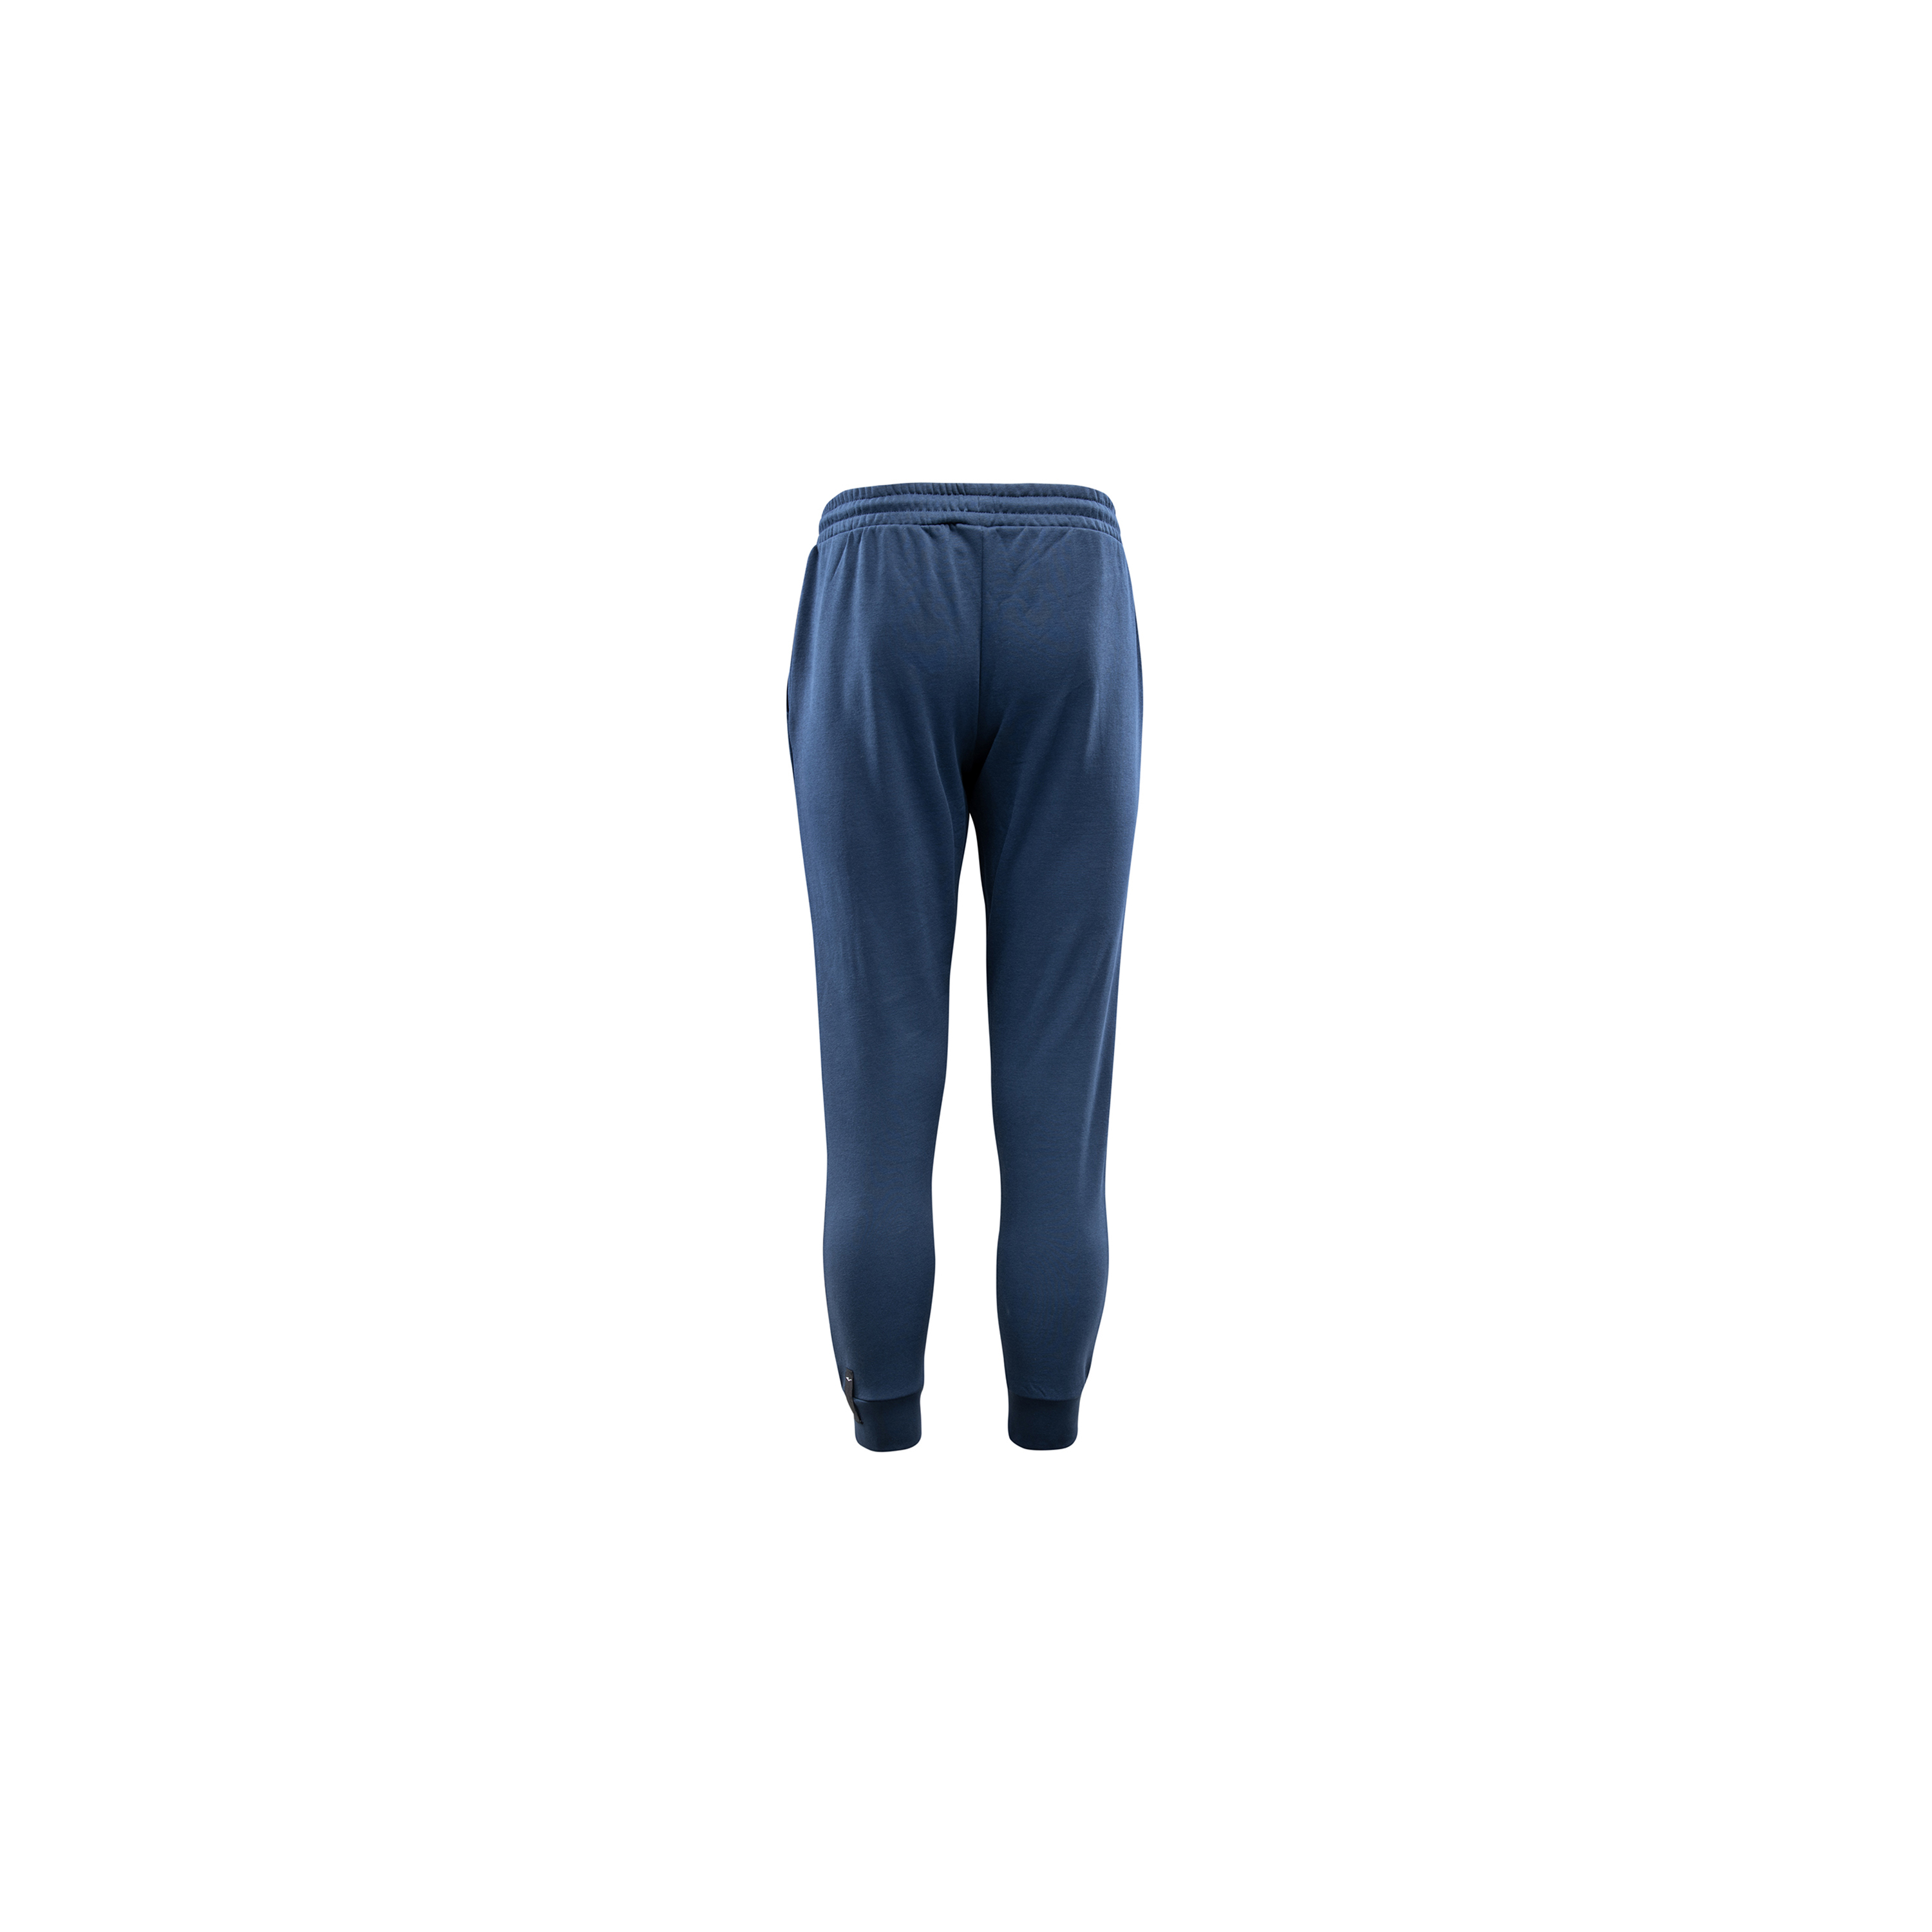 Pantalones Everlast Audubon - Azul Marino  MKP